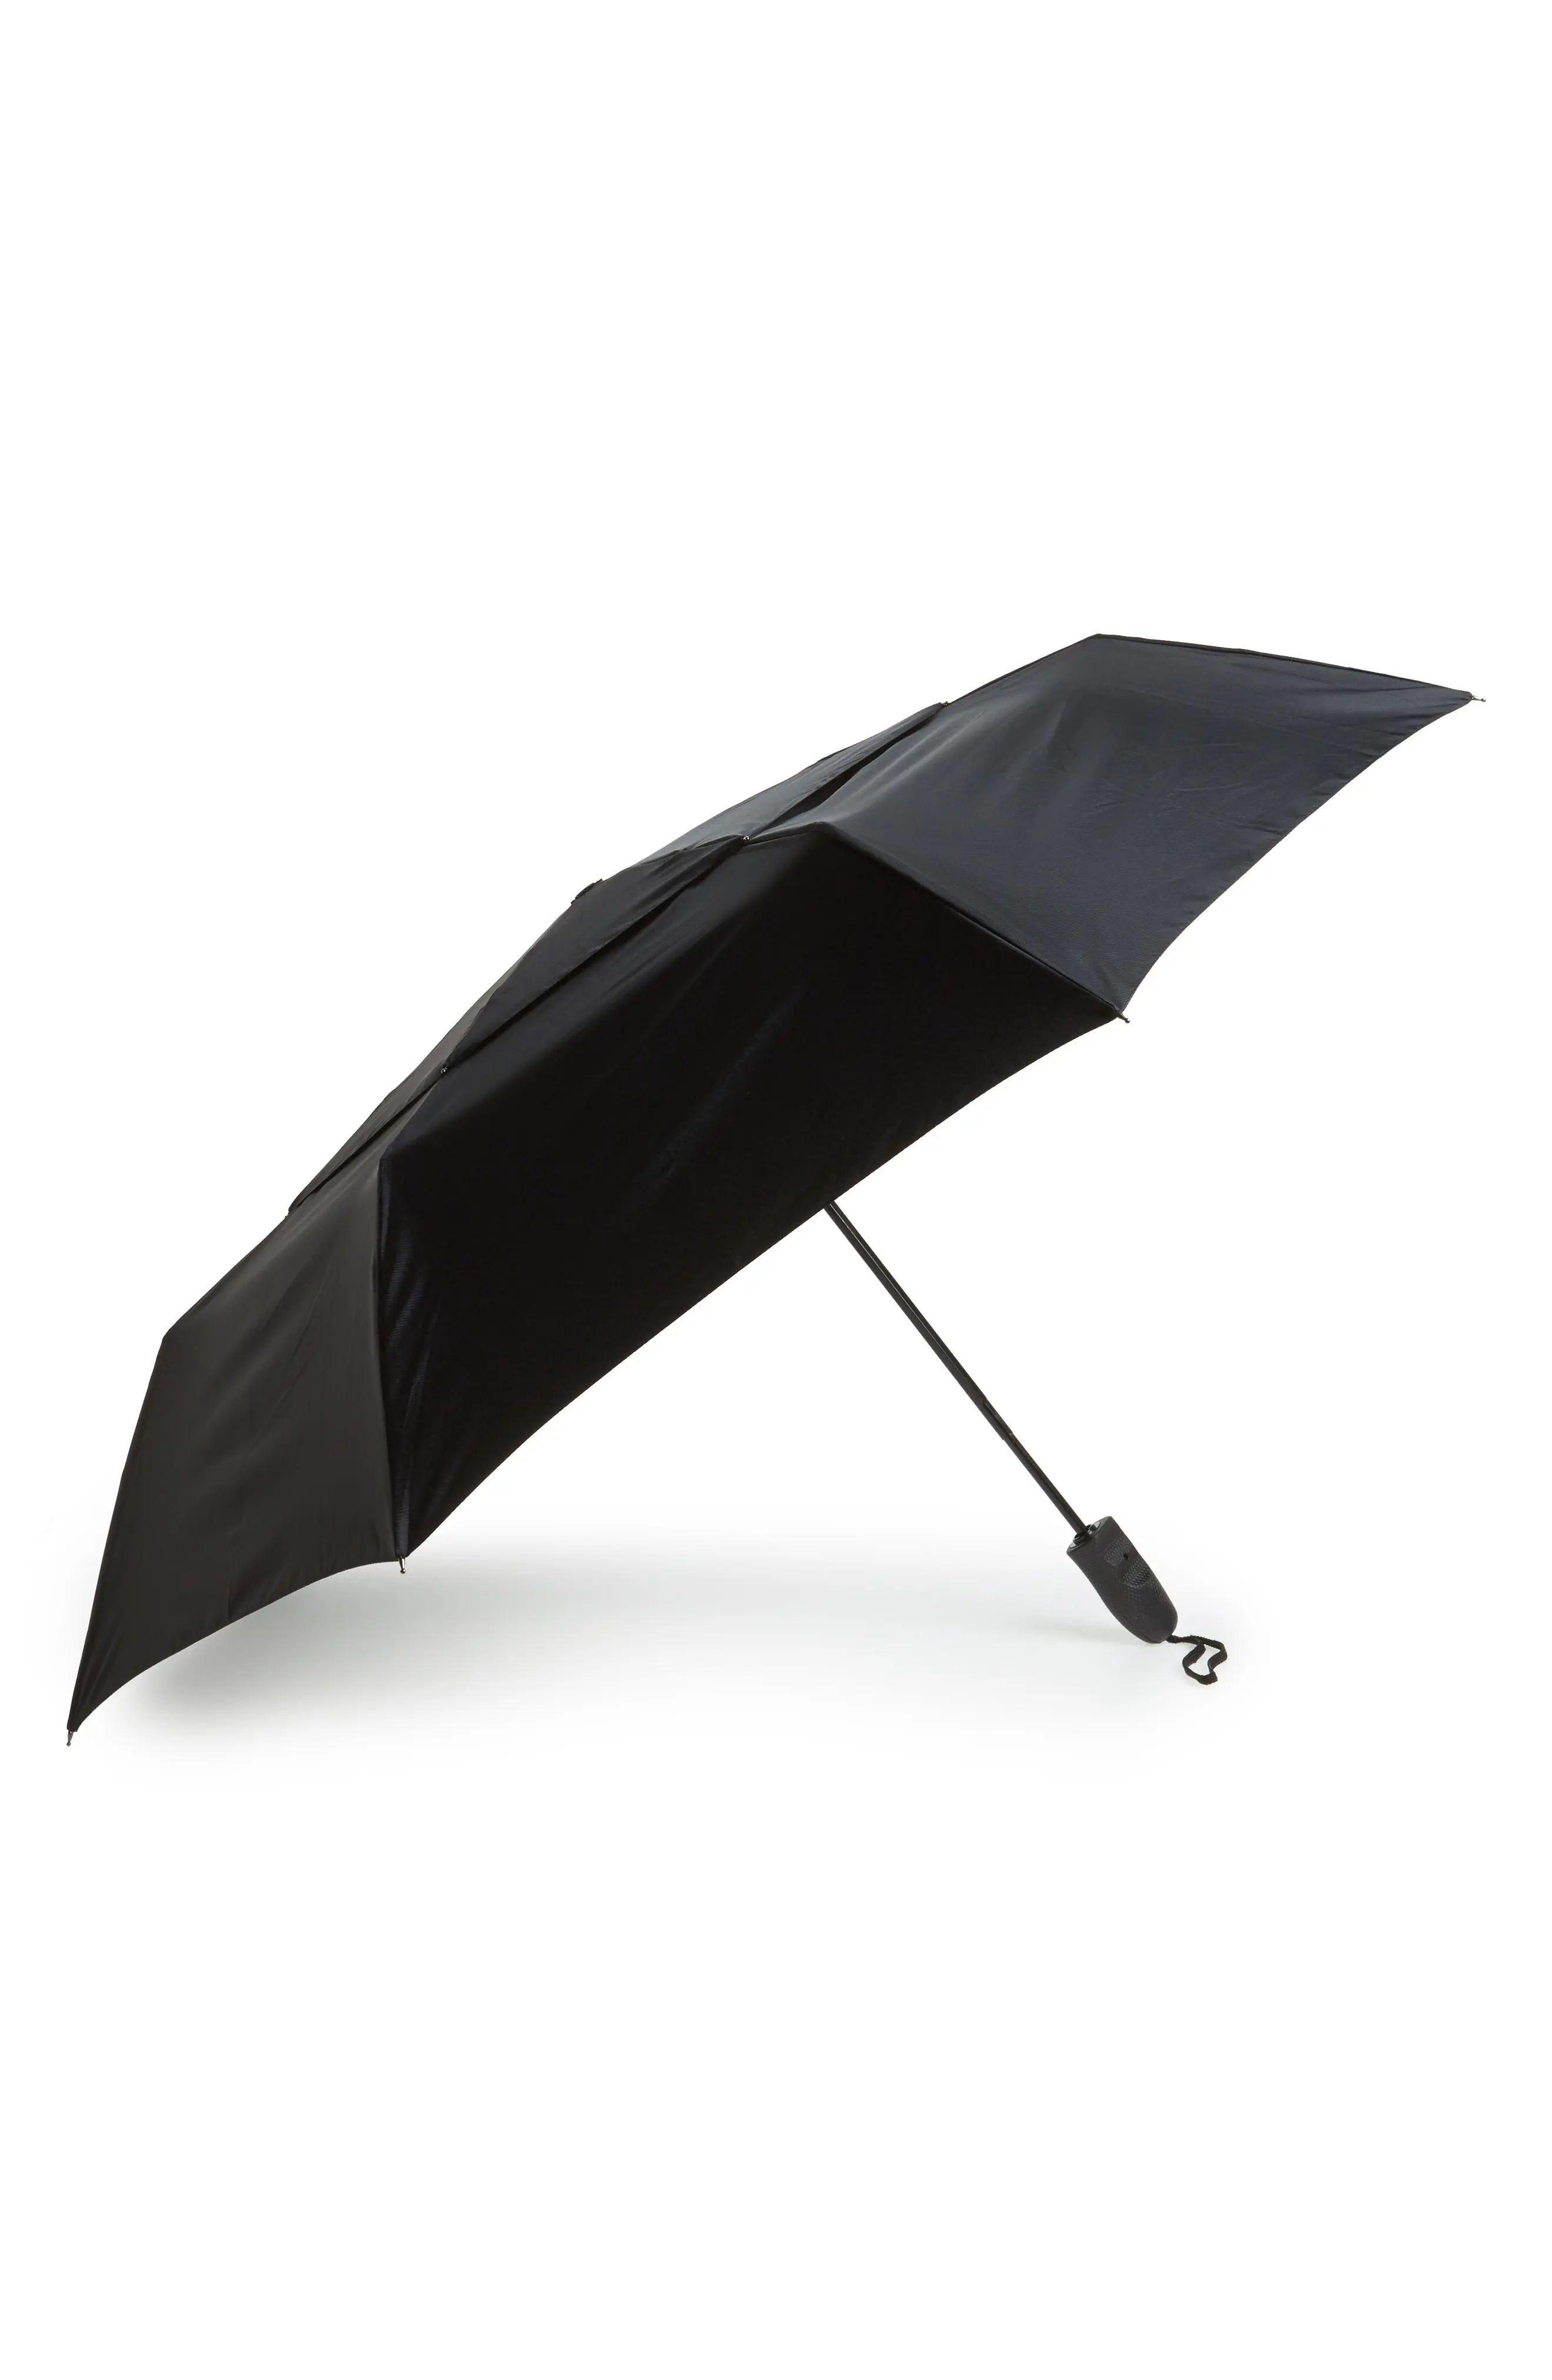 Nordstrom Telescoping Umbrella in Black at Nordstrom | Nordstrom